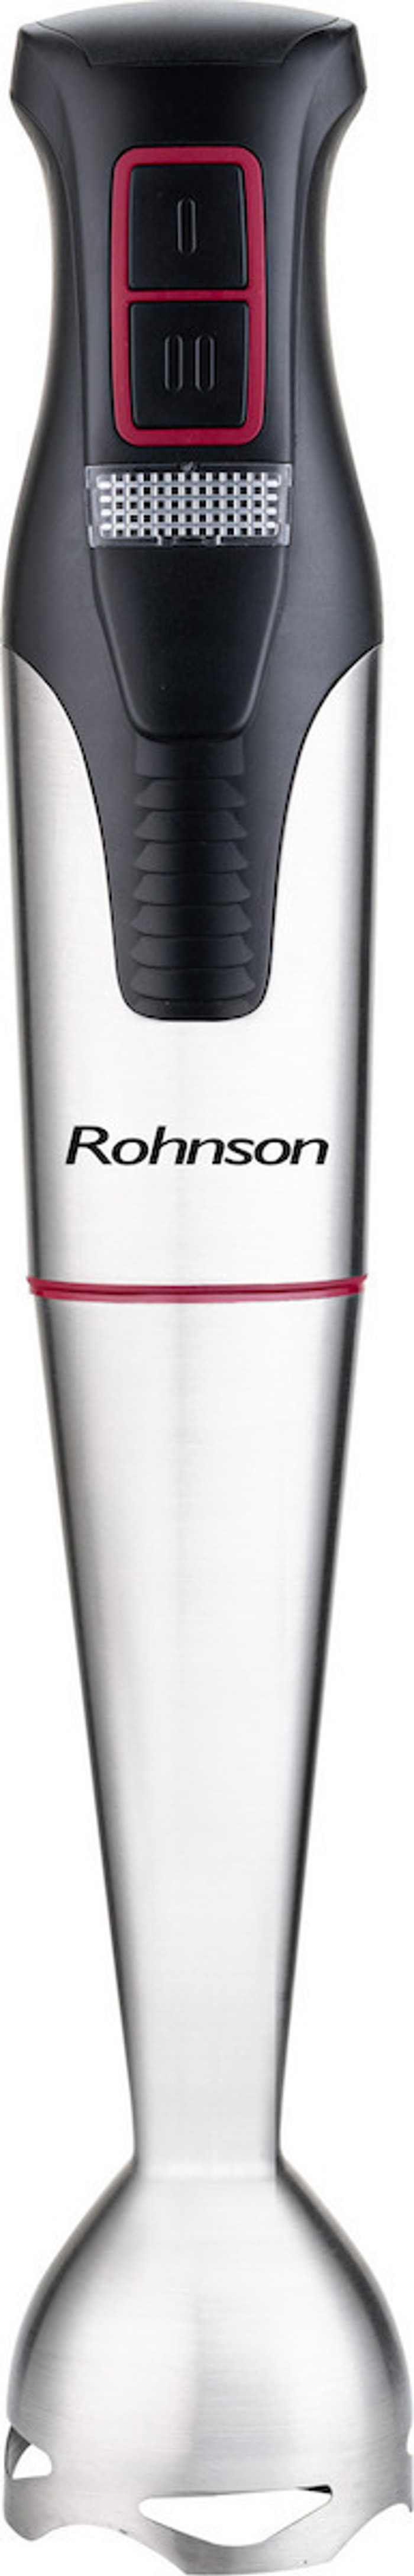 Rohnson R-598 (Rabdomplenter 1200W)